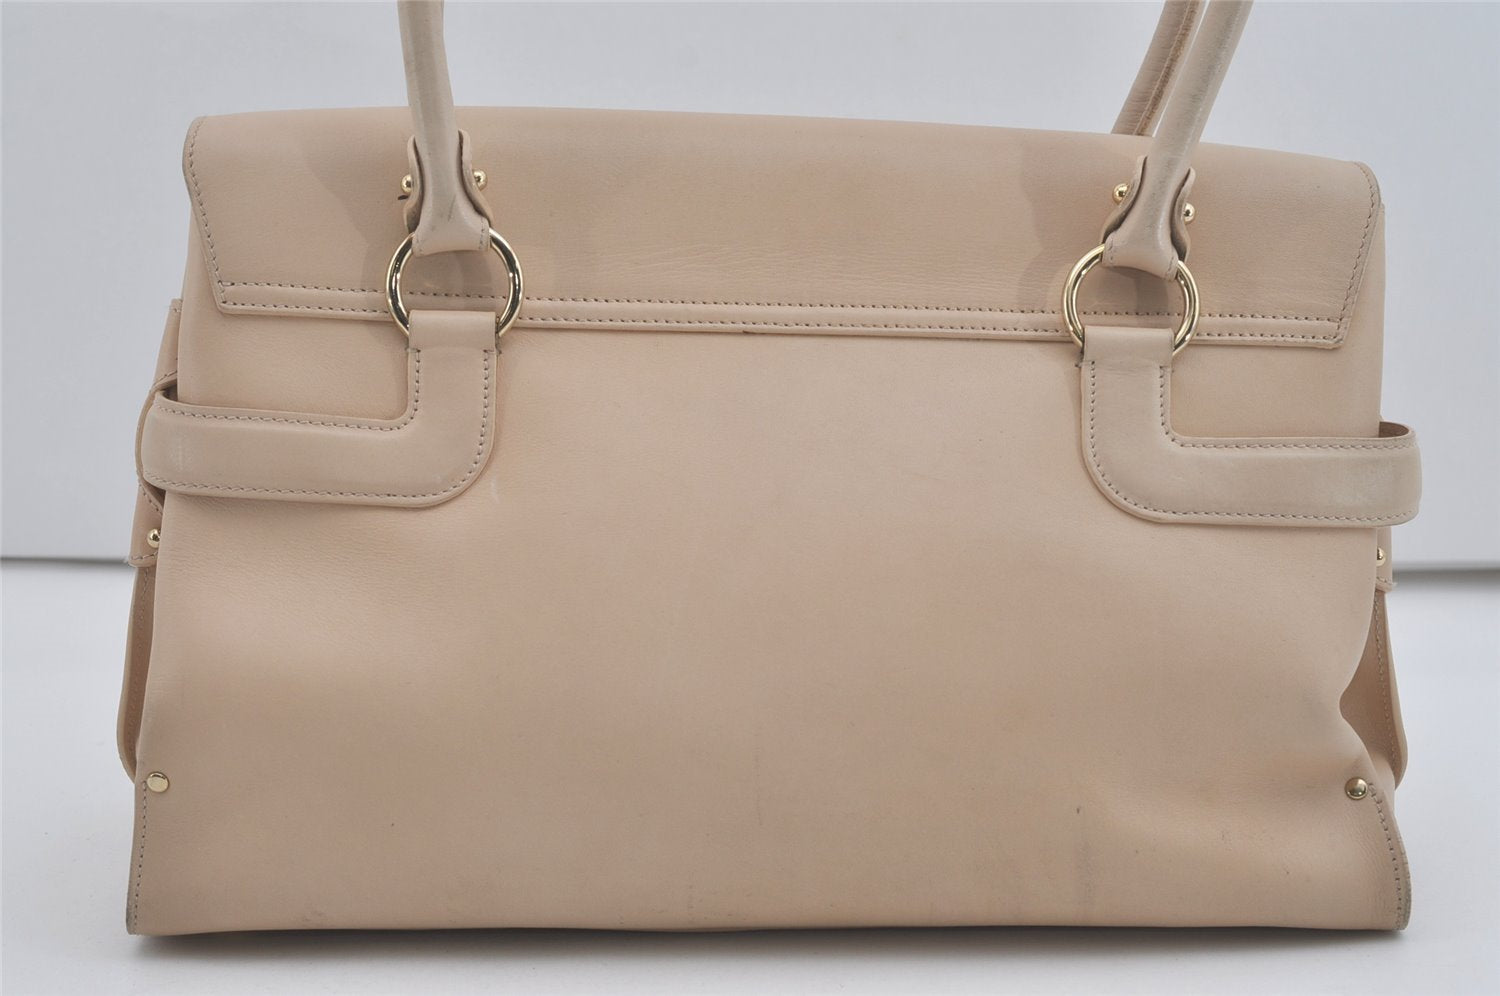 Authentic Salvatore Ferragamo Gancini Leather Shoulder Hand Bag Beige 7795I